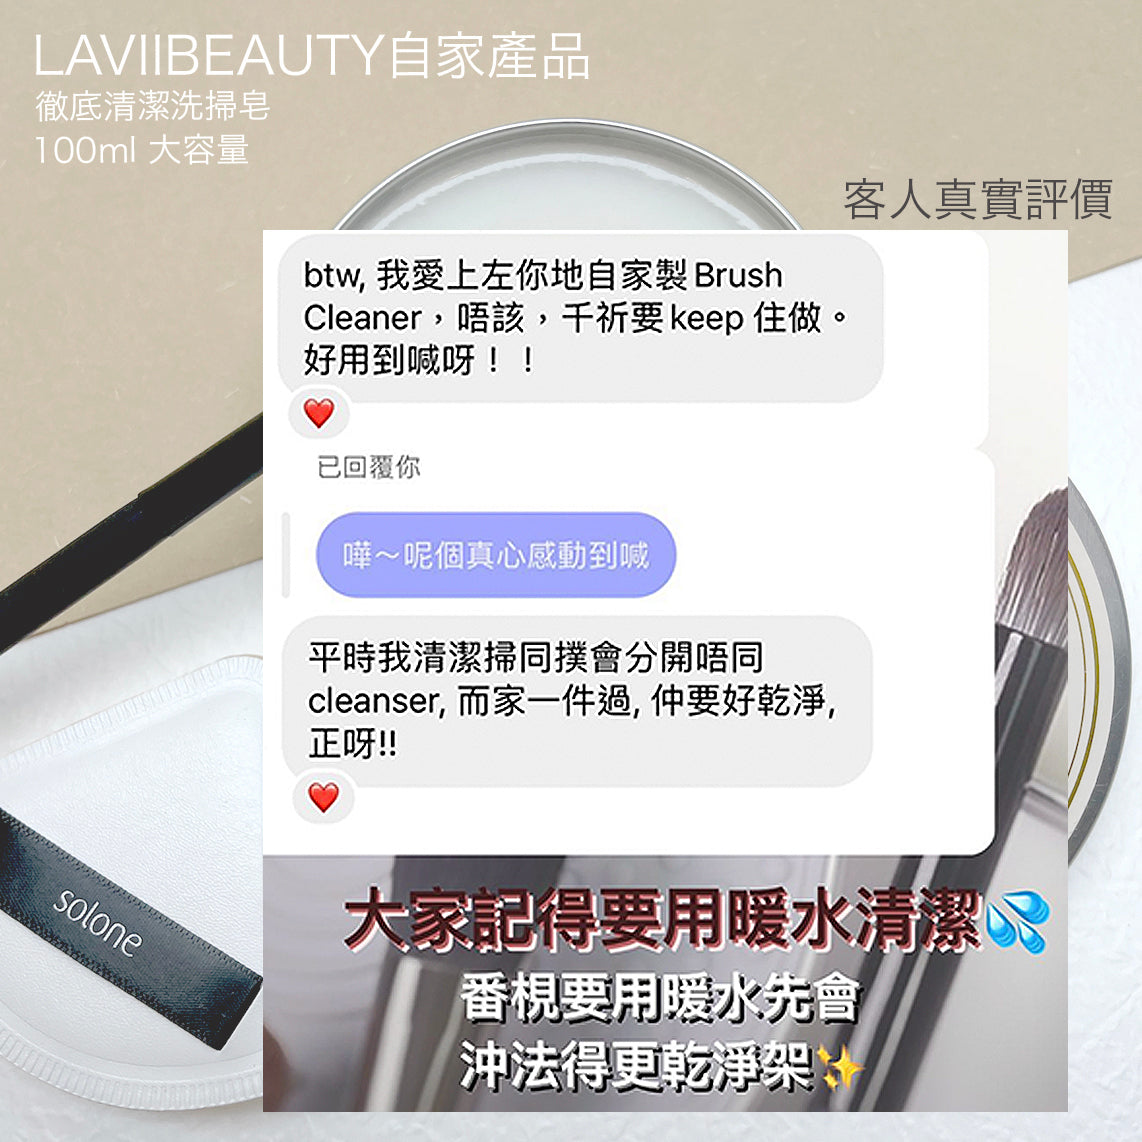 【LaviiBeauty自家產品】 Lavii Savon 蘆薈洗掃皂 brush cleaner 100g (內附洗掃墊)【全網現貨】